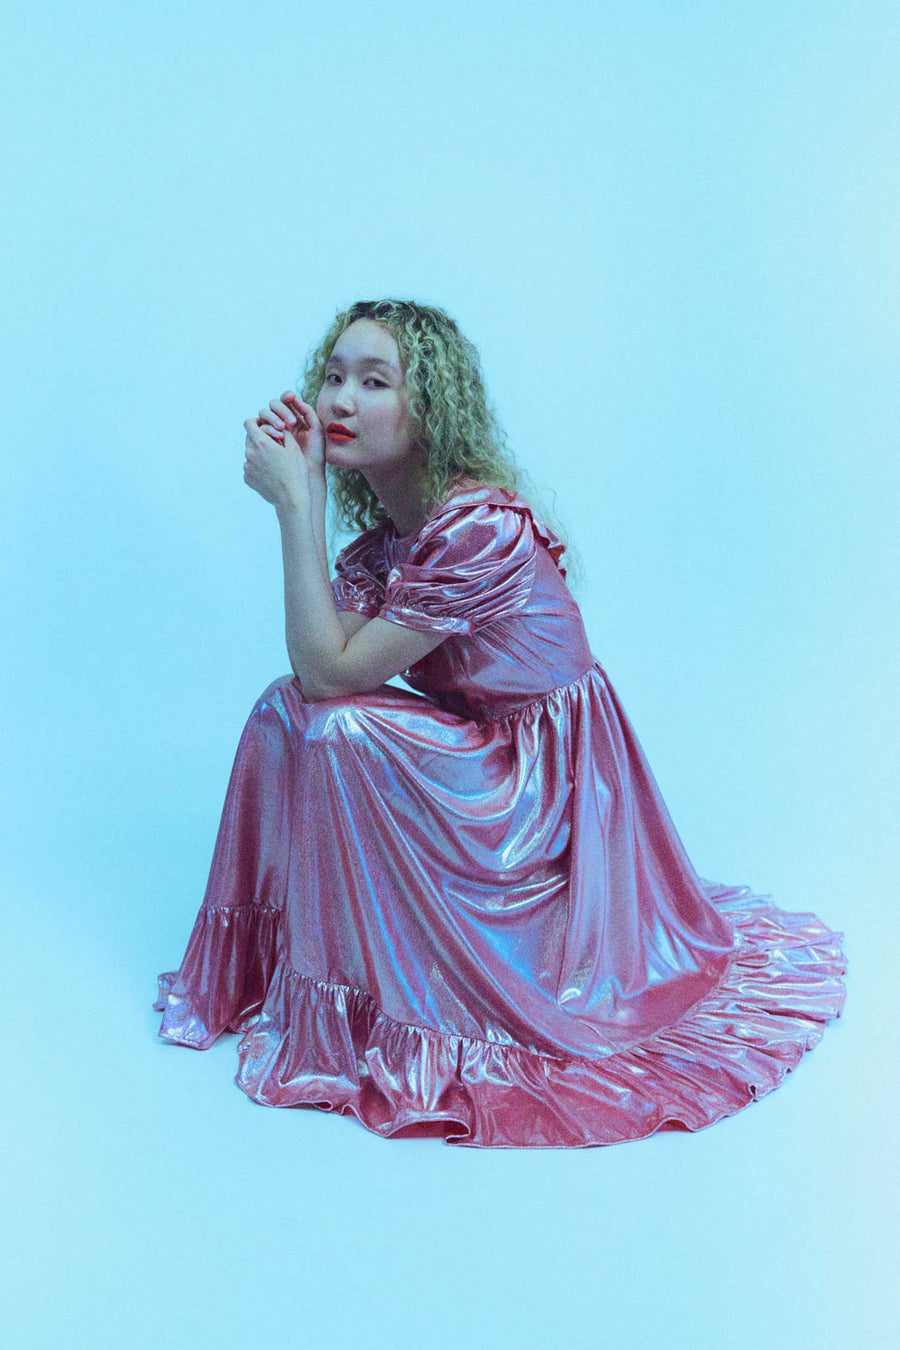 BATSHEVA - May Dress in Ballerina Pink Holographic